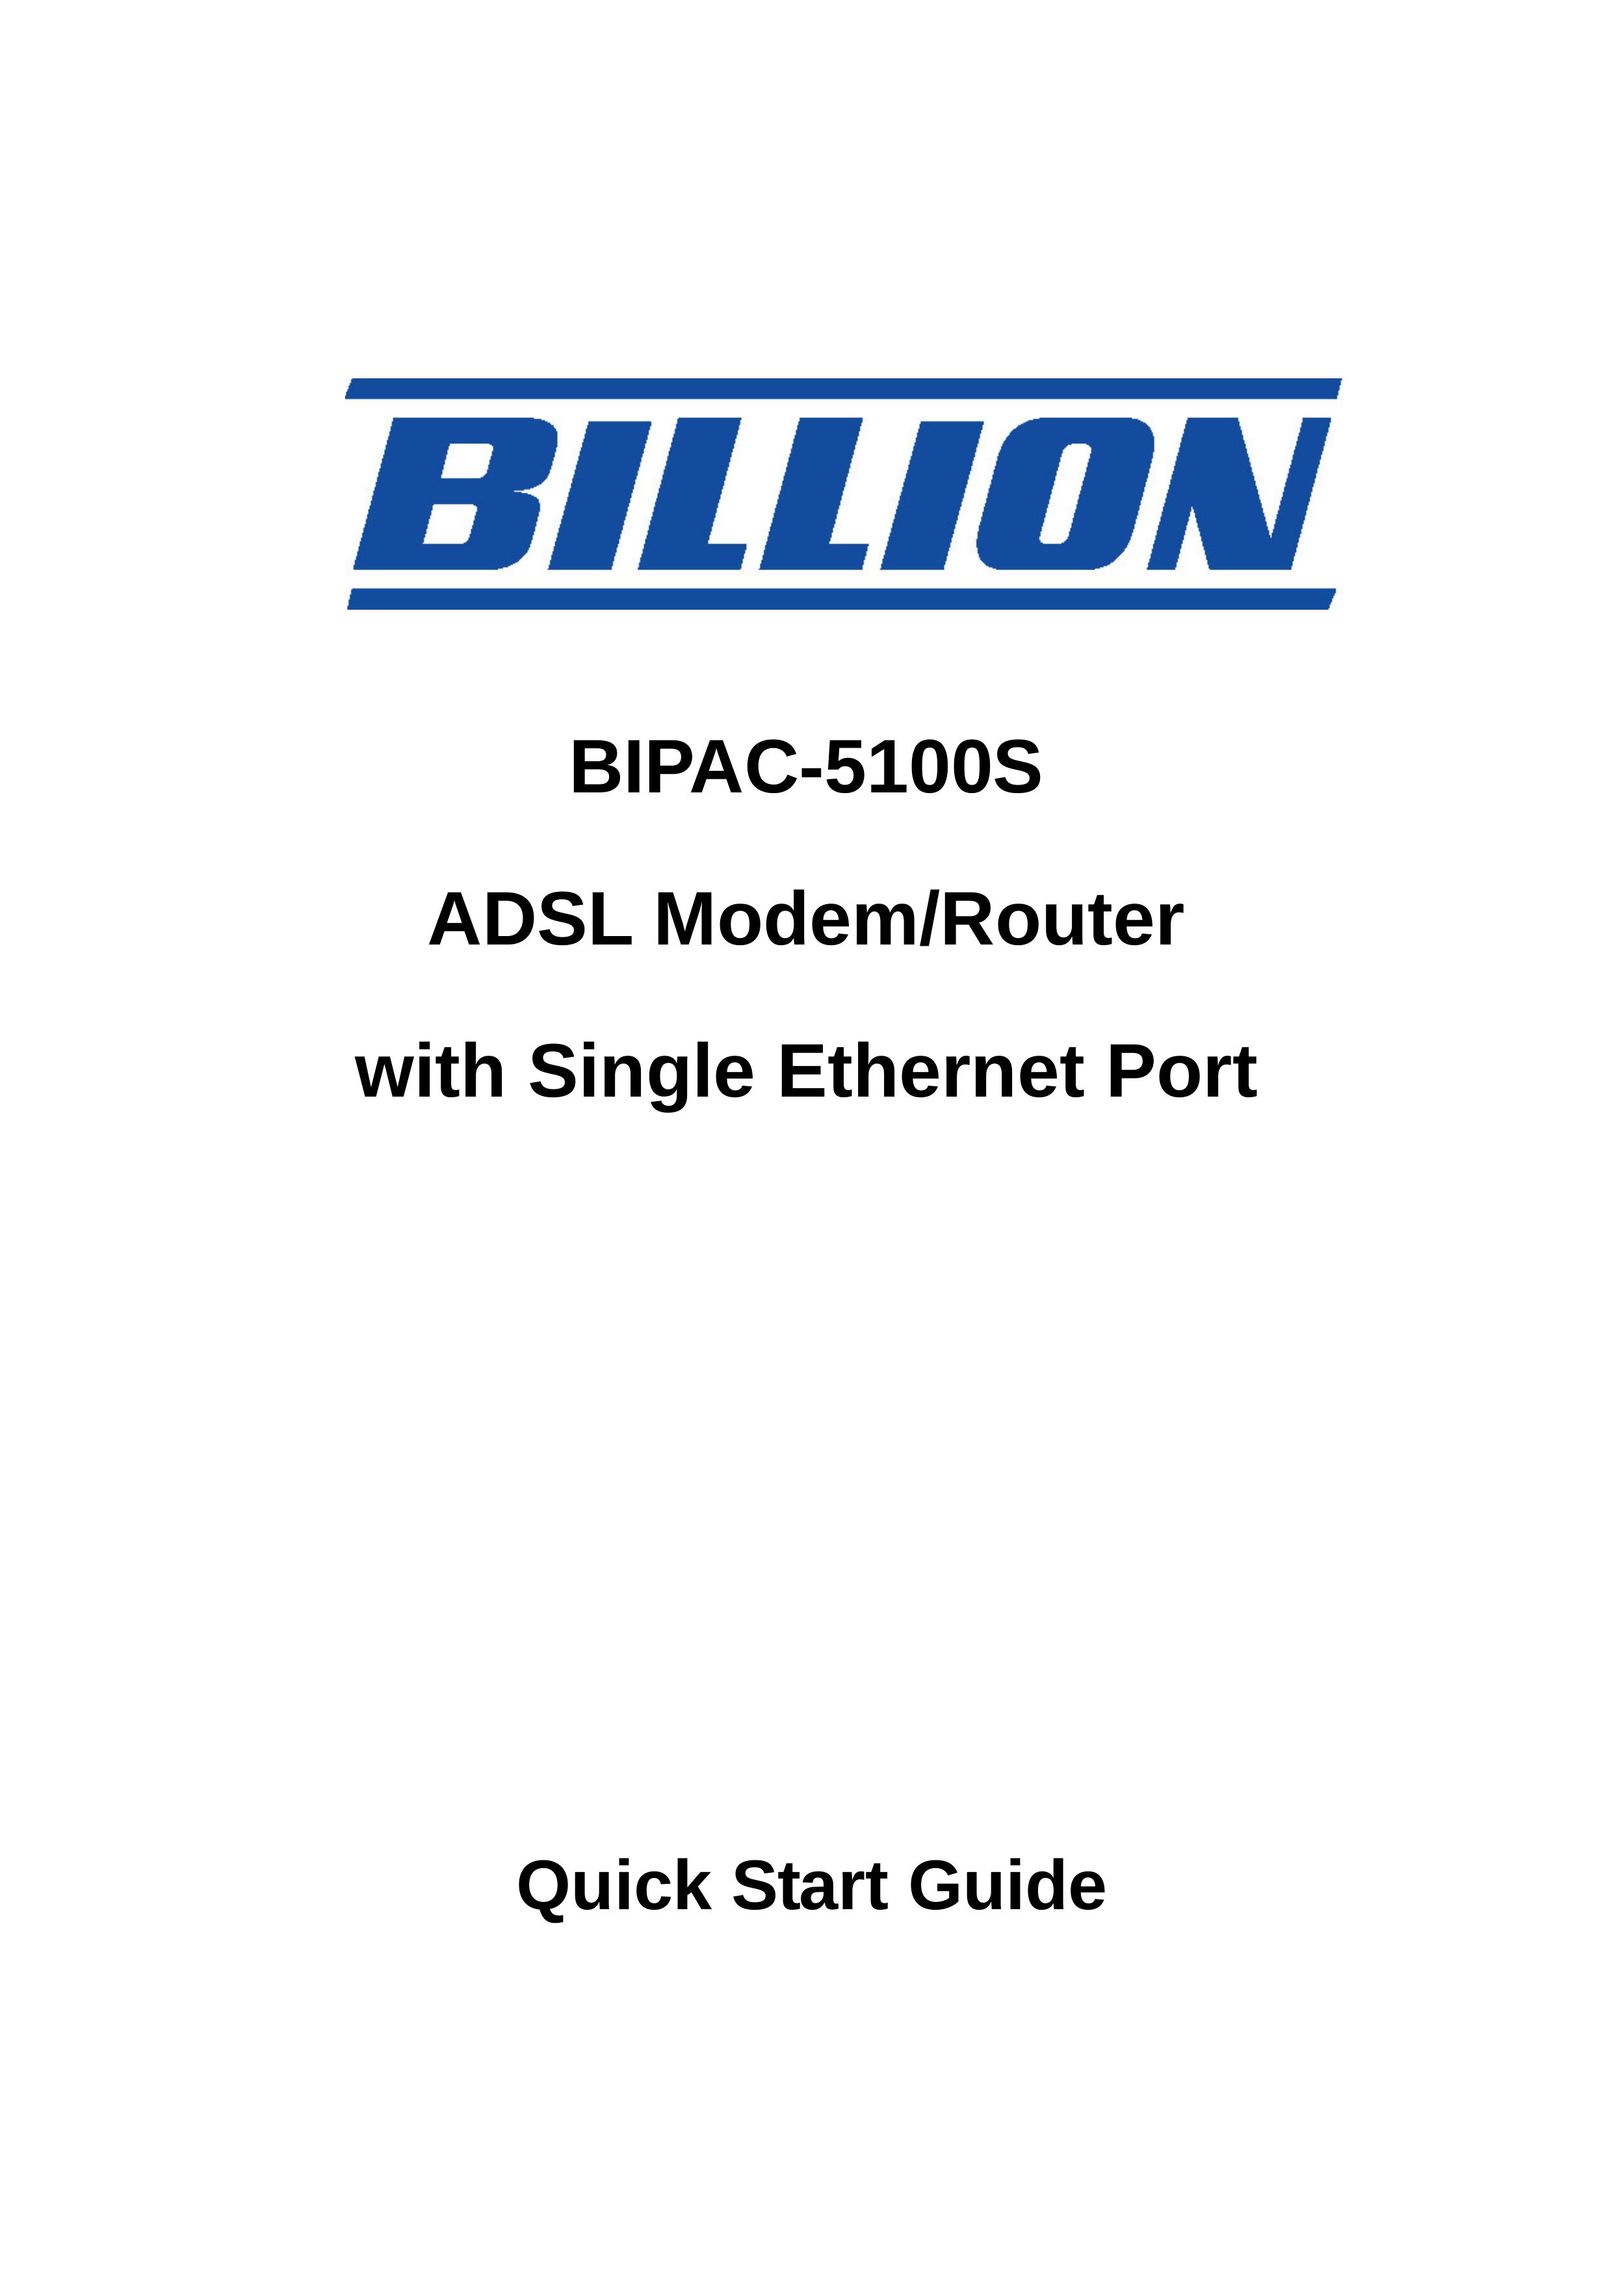 Billion Electric Company BIPAC-5100S Modem User Manual